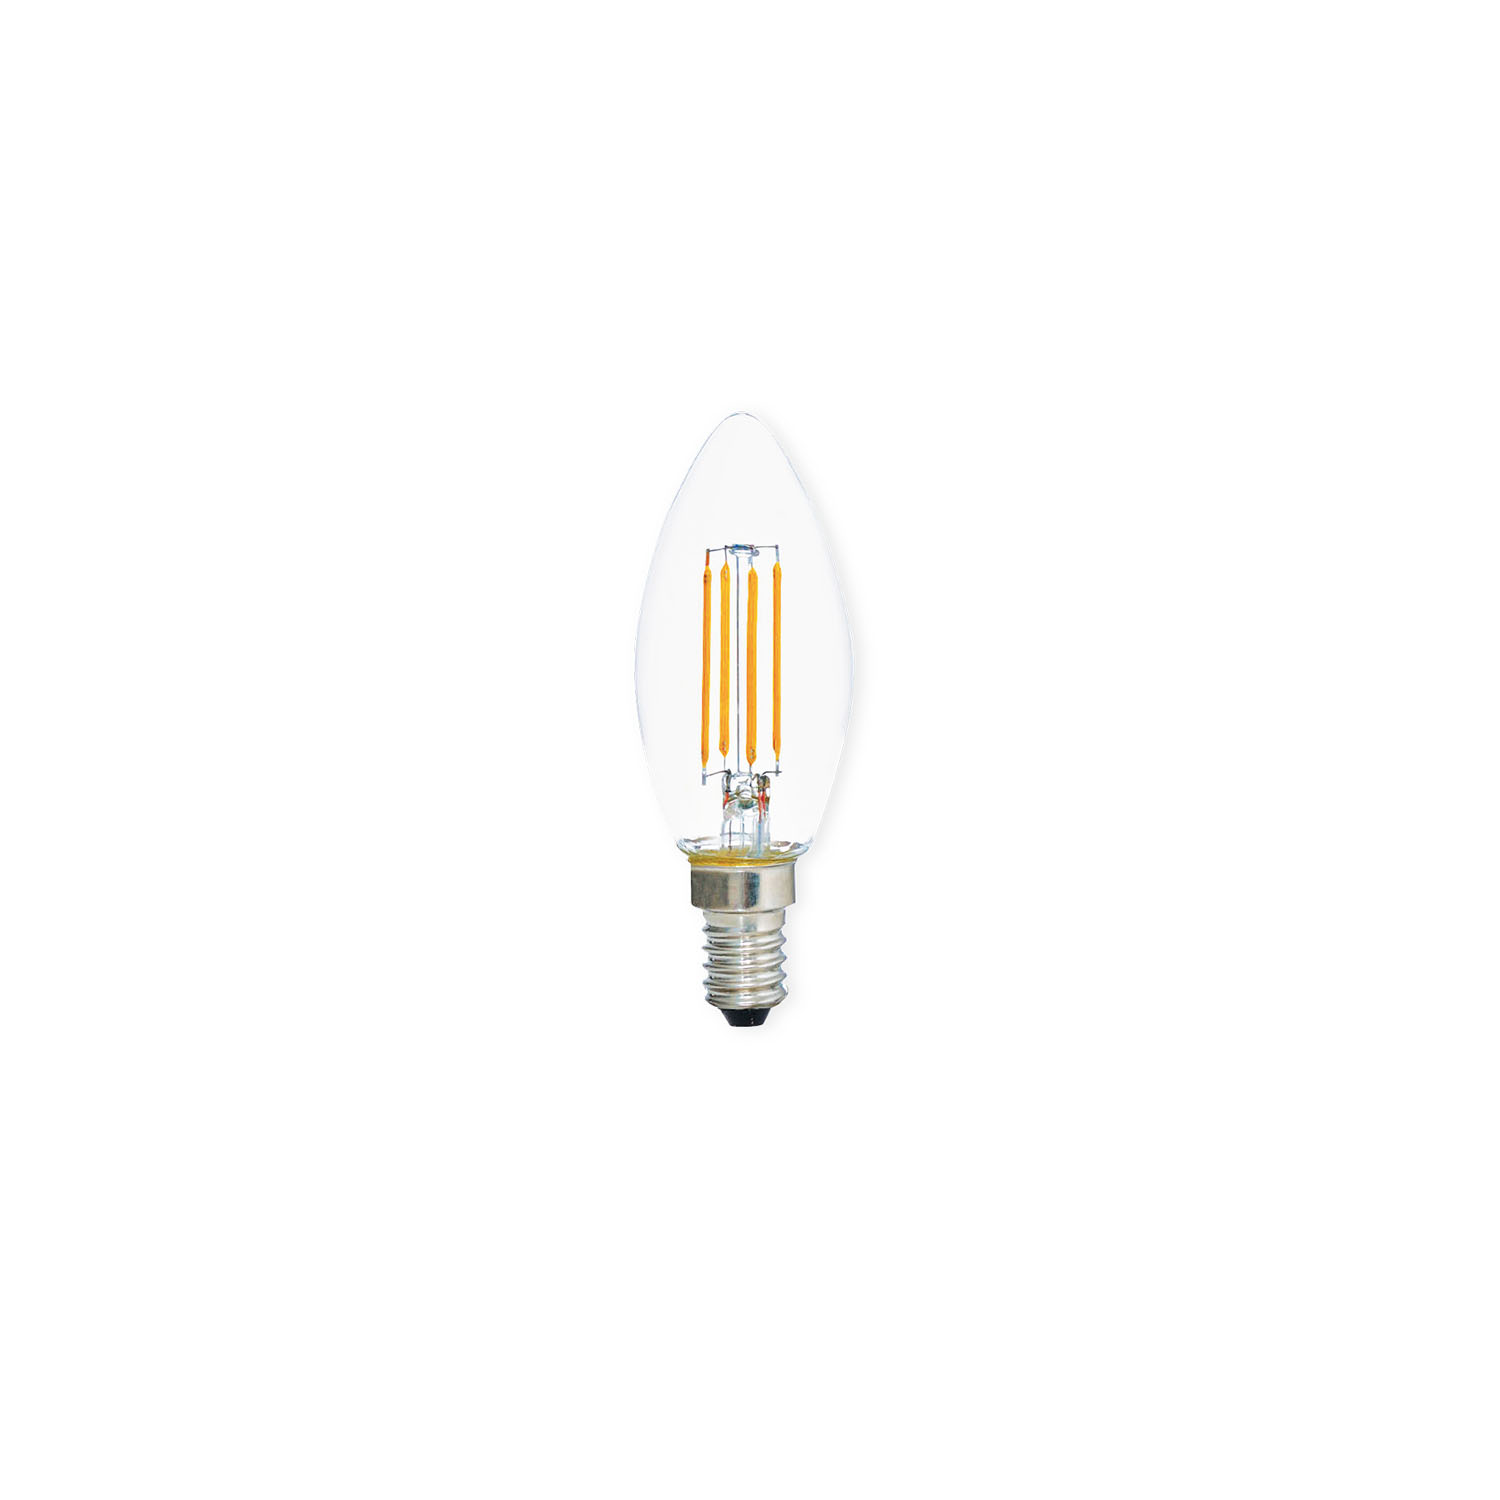 E14 4W LED CANDLE LAMP 2700K CLEAR GLASS DIFFUSER DIM